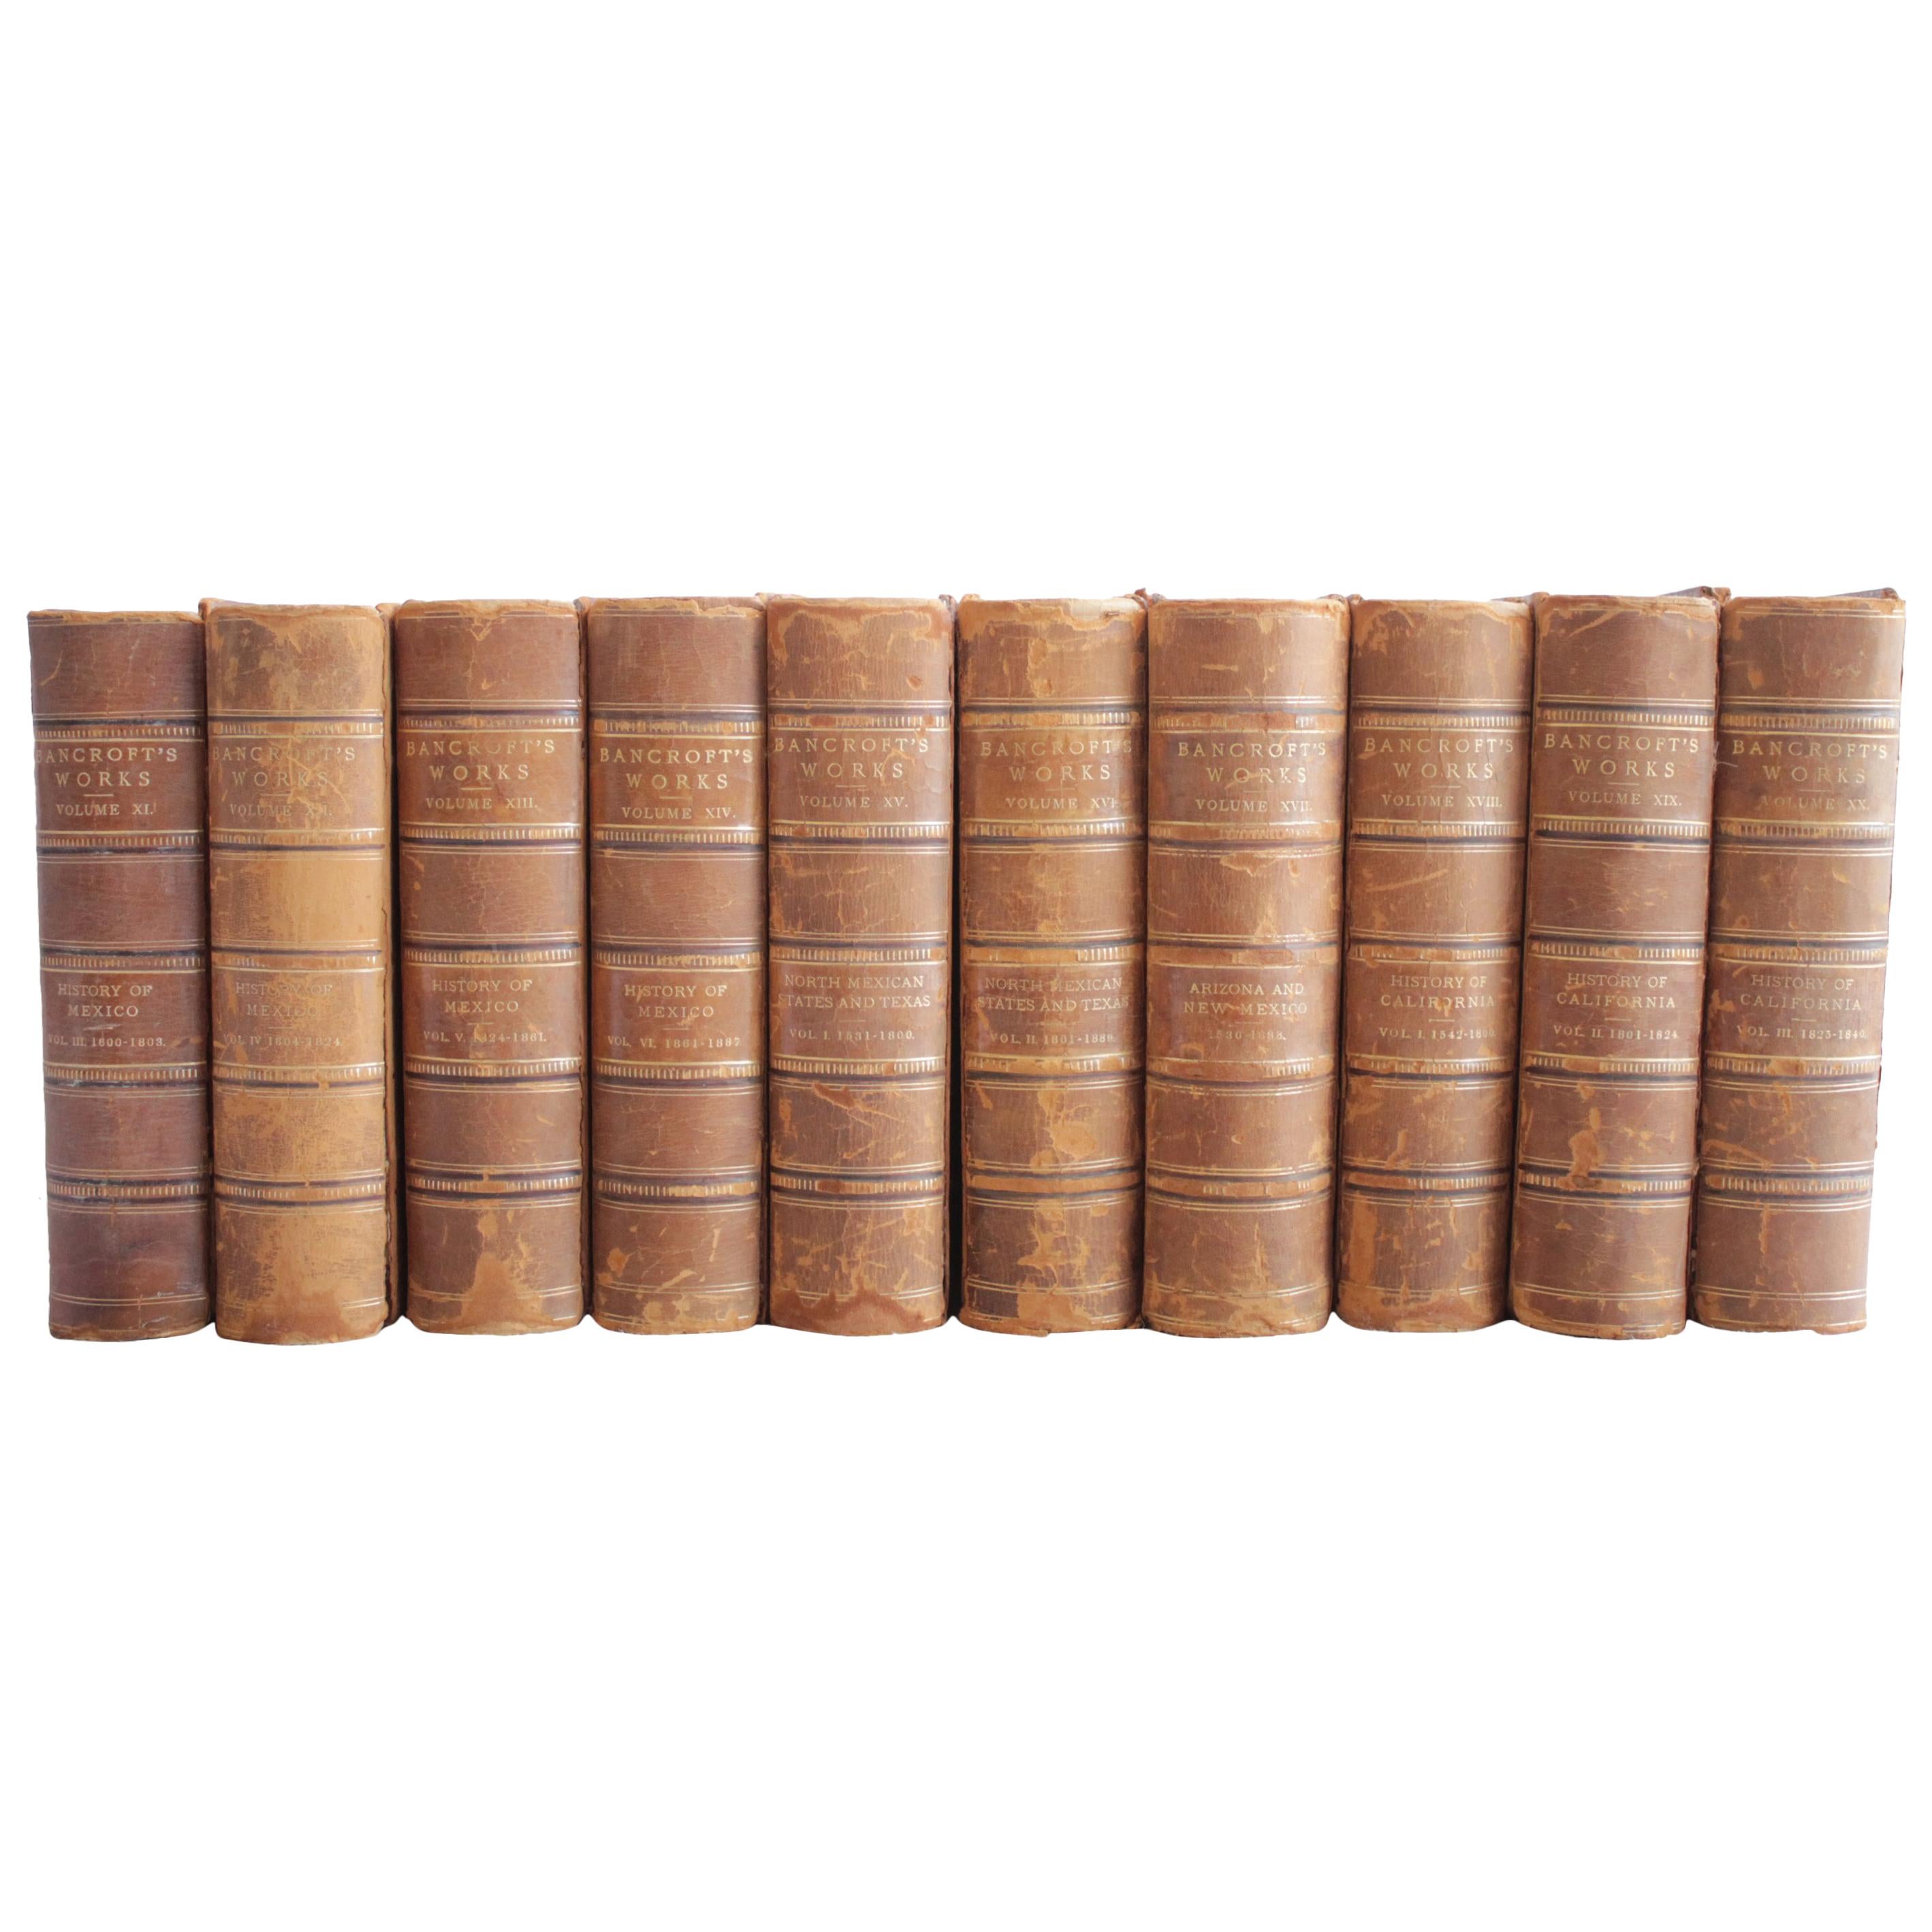 Bancroft Works Antique Leather Bound Books Volume 11 - 20